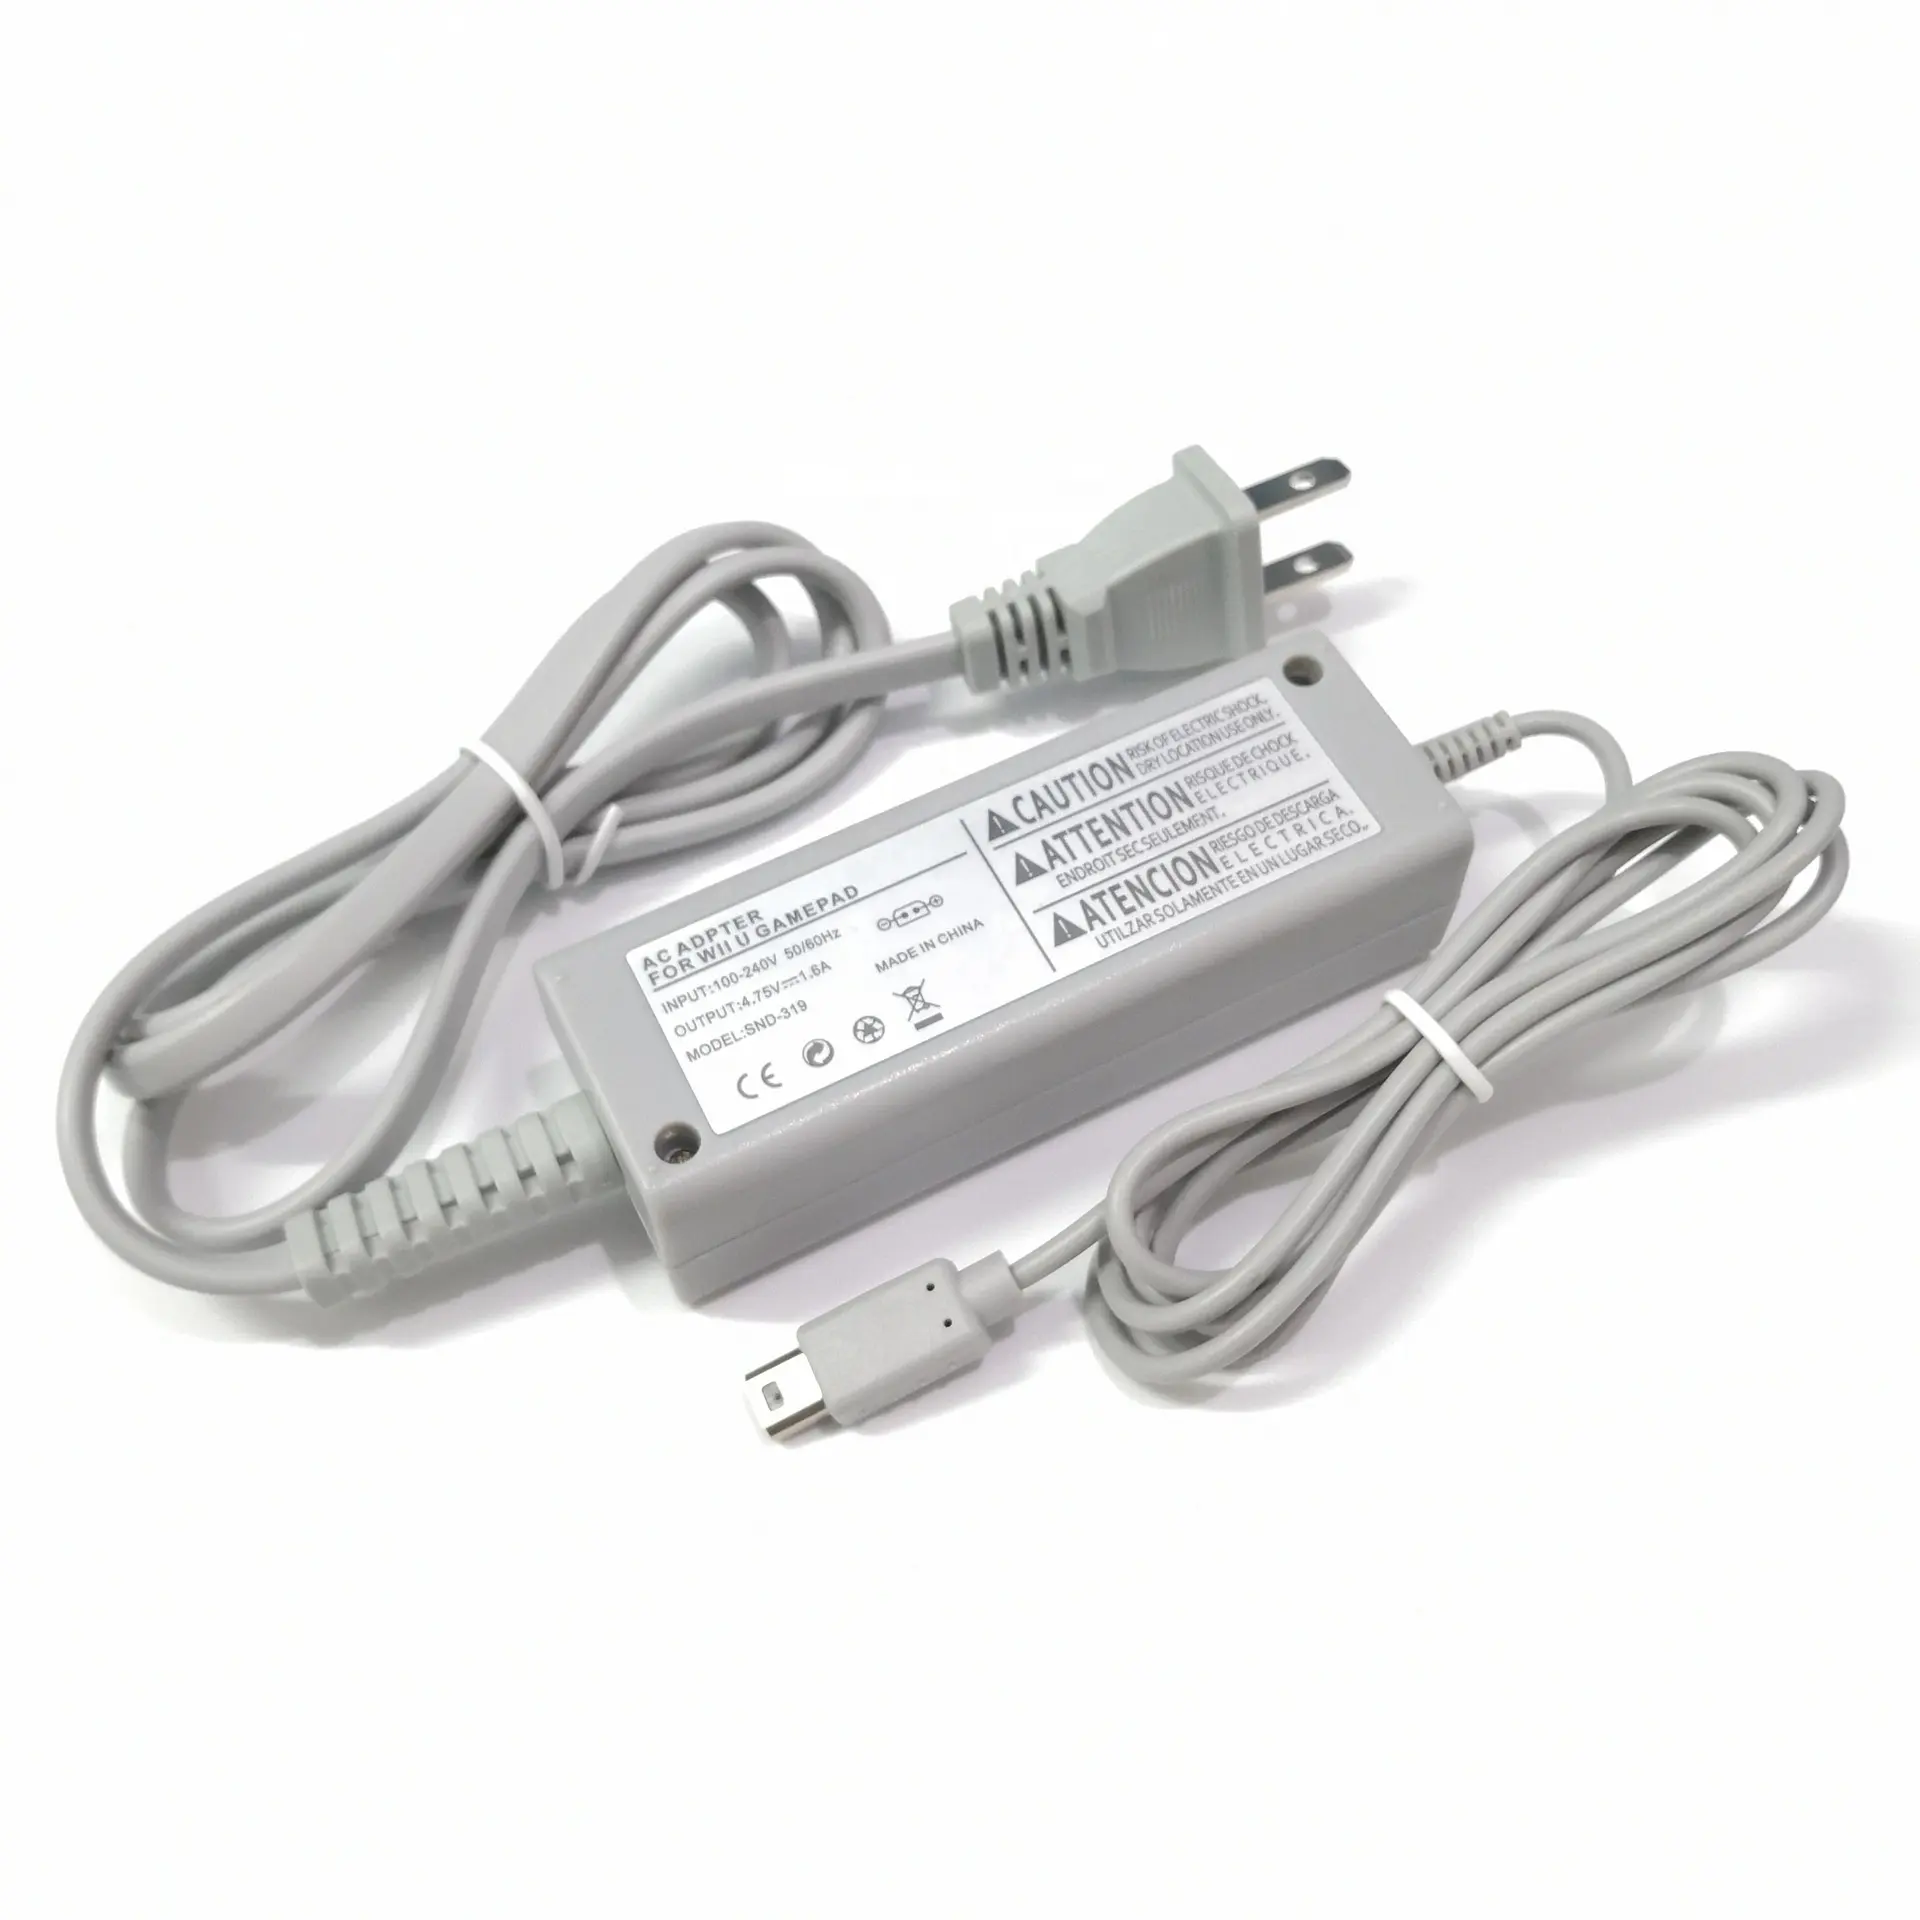 Us Plug 100-240V Ac Charger Adapter Home Muur Voeding Voor Nintendo Wiiu Wii U Gamepad Joypad controller